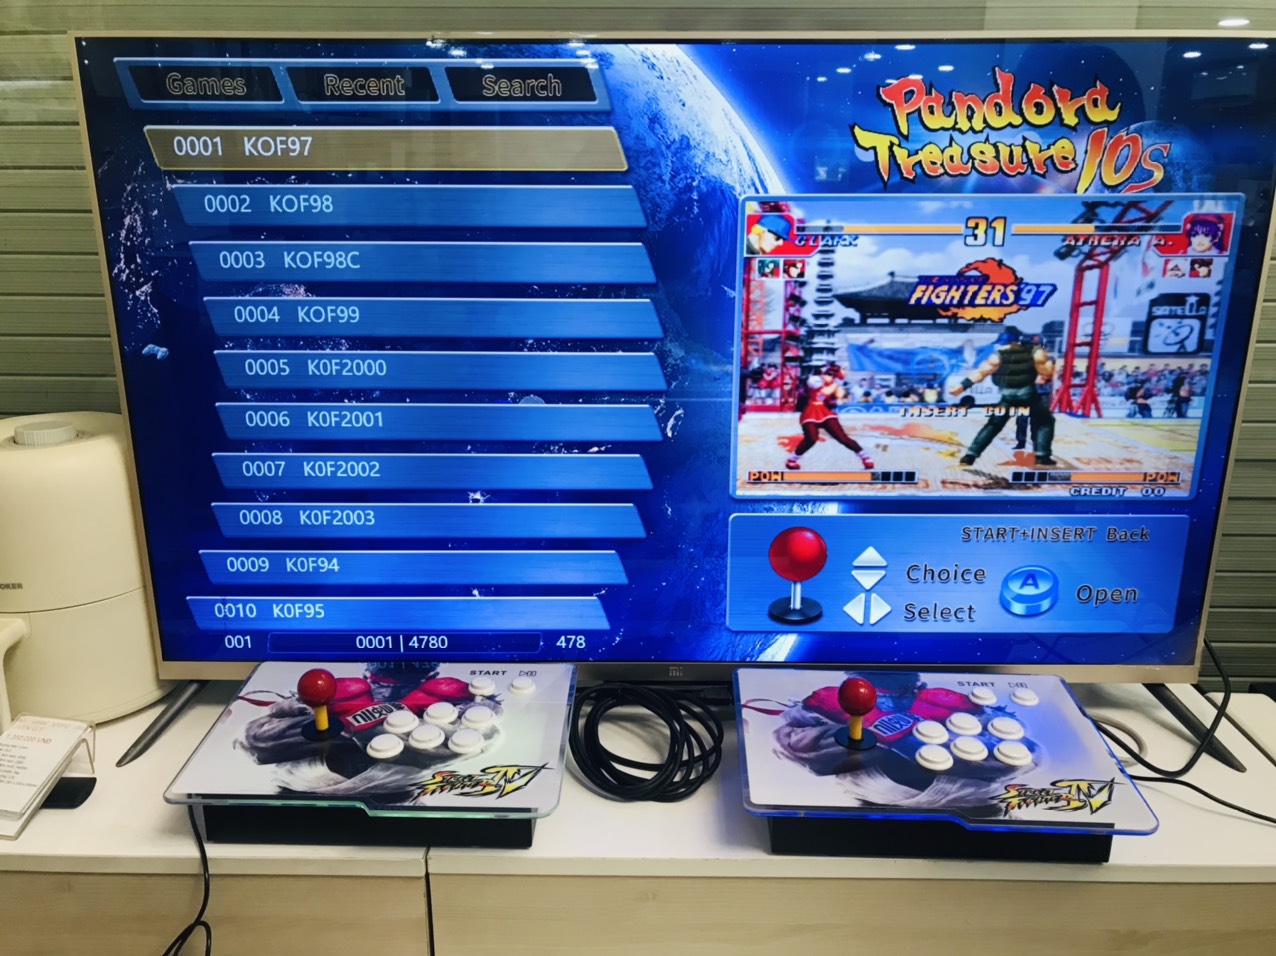 Slendytubbies 3 Community Edition Gameplay on Huawei P Smart 2018 